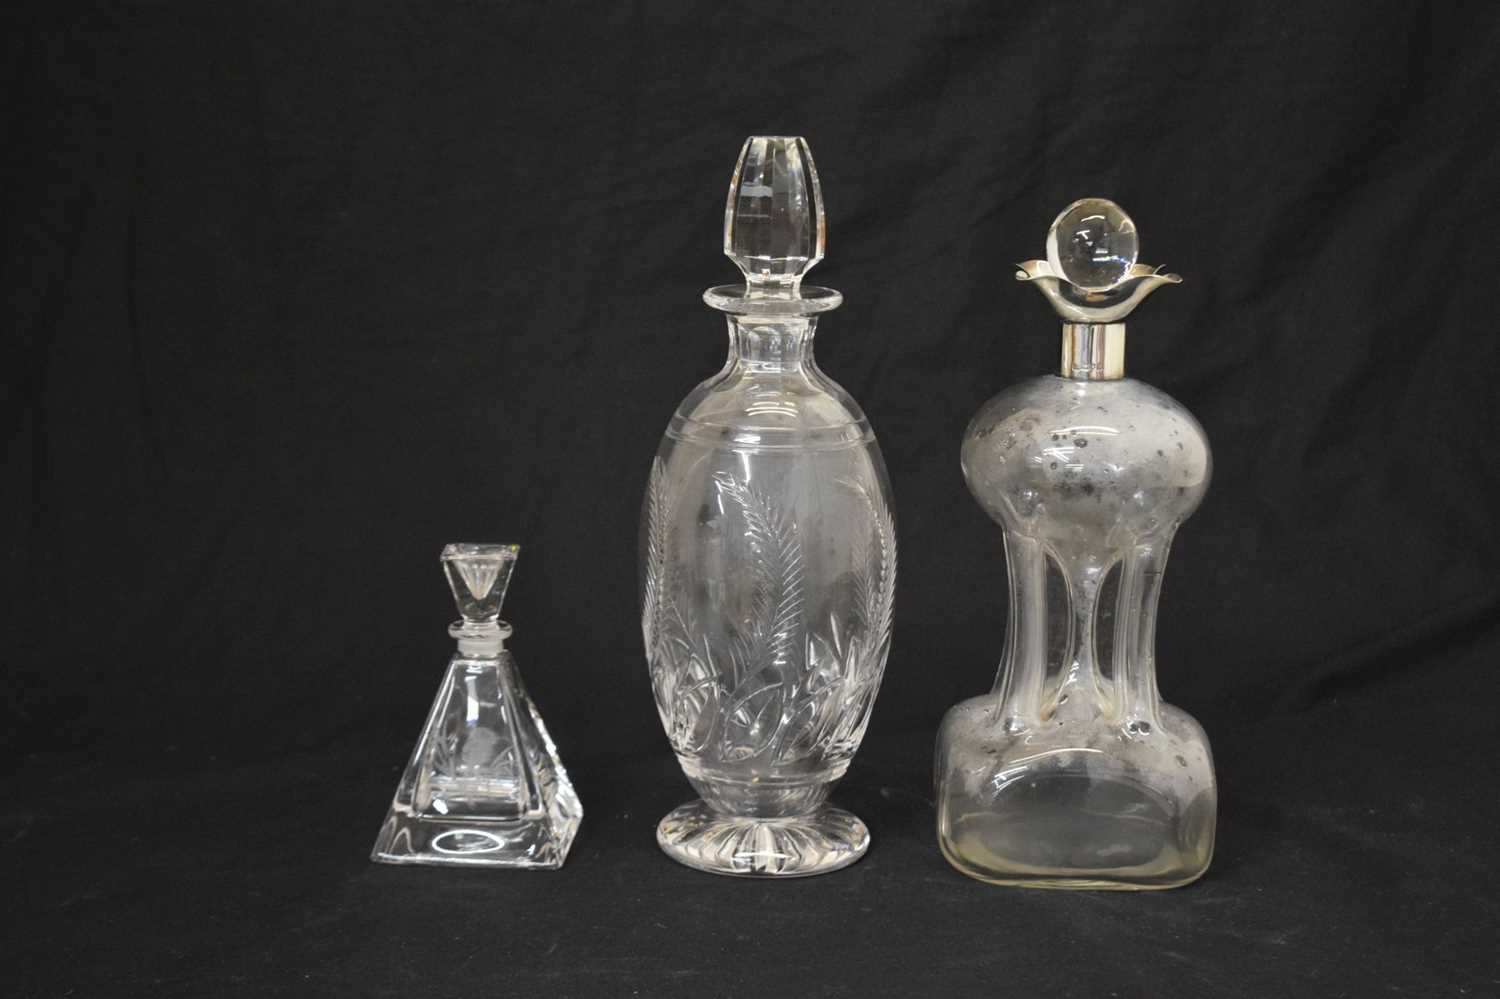 Edward VII silver mounted glug glug decanter, a Stuart crystal decanter, and a nightcap decanter - Image 2 of 8